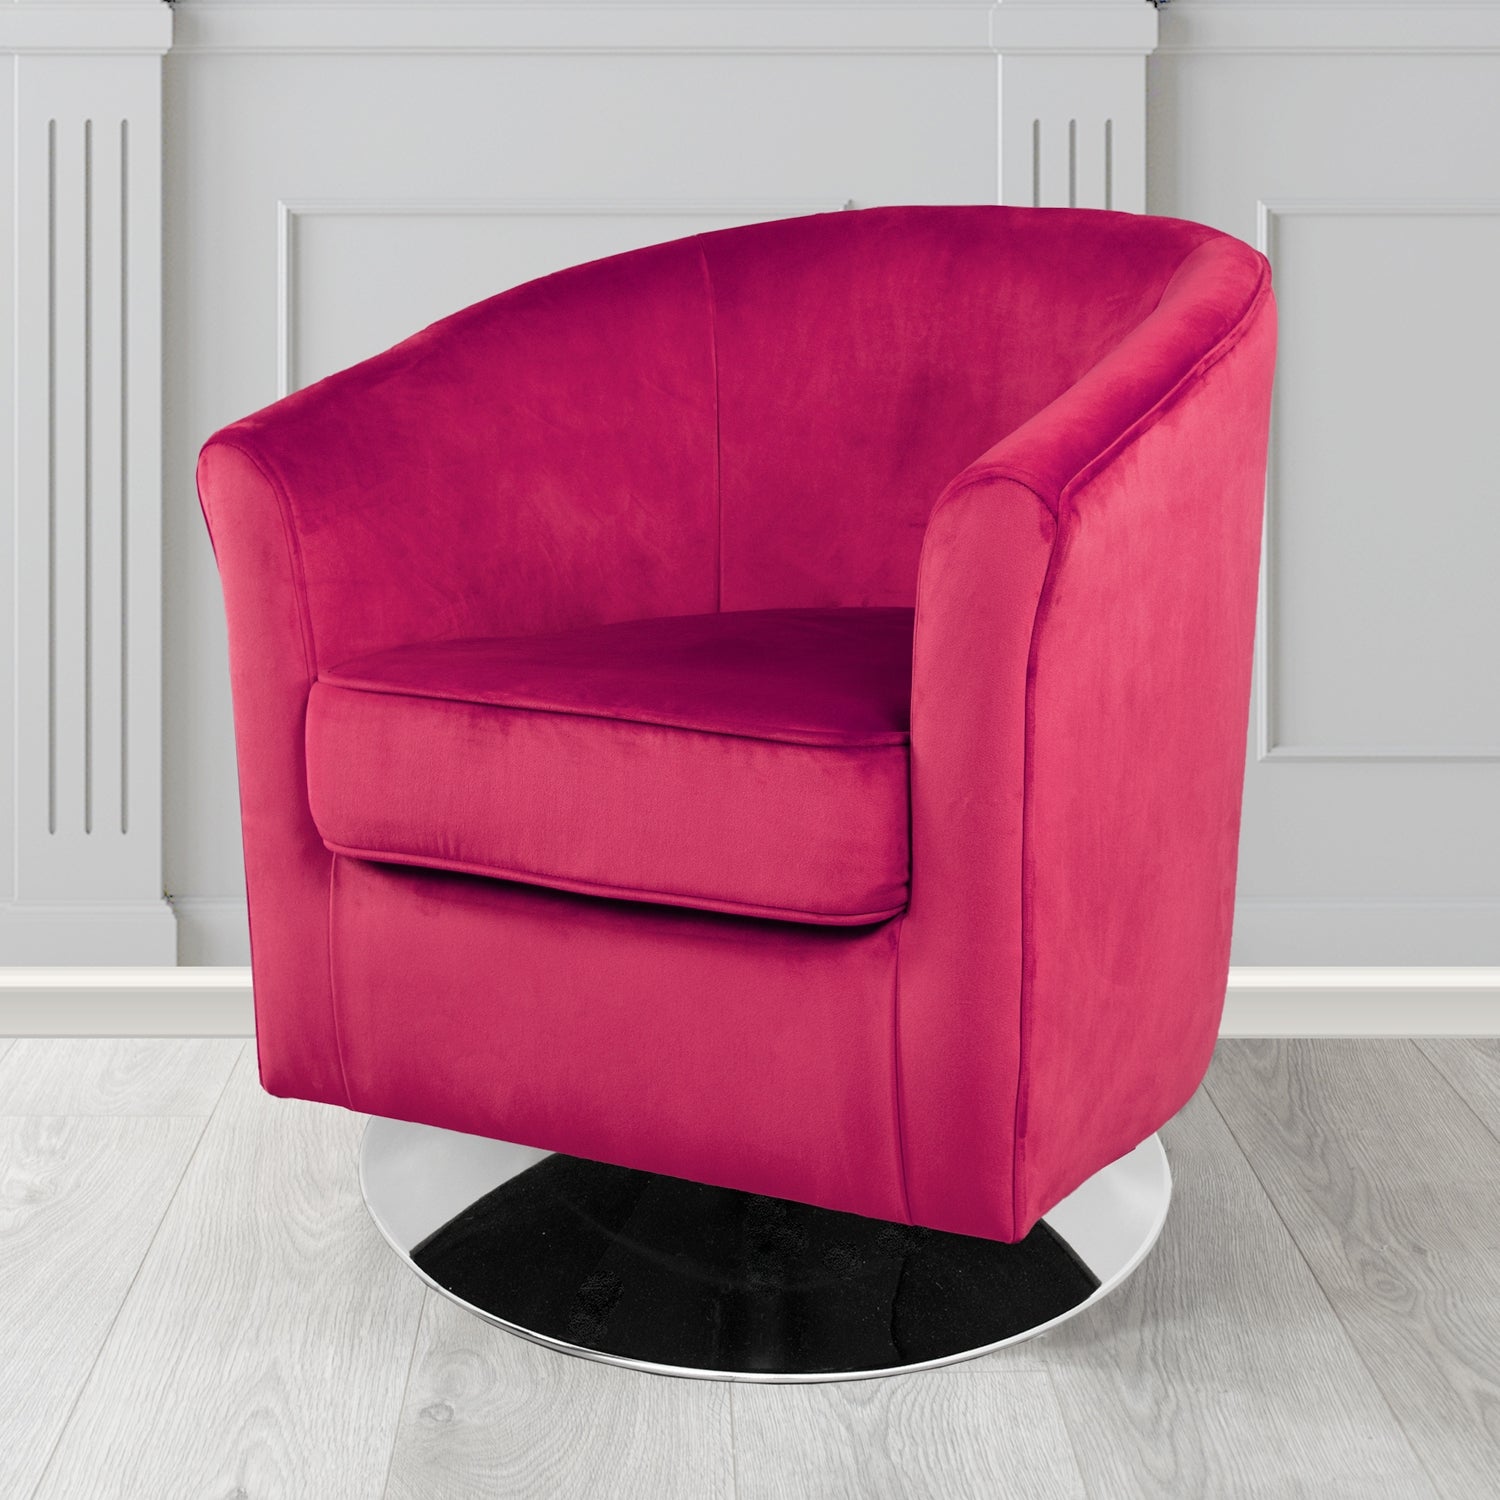 Devon Swivel Tub Chair in Monaco Boysenberry Velvet Fabric - The Tub Chair Shop